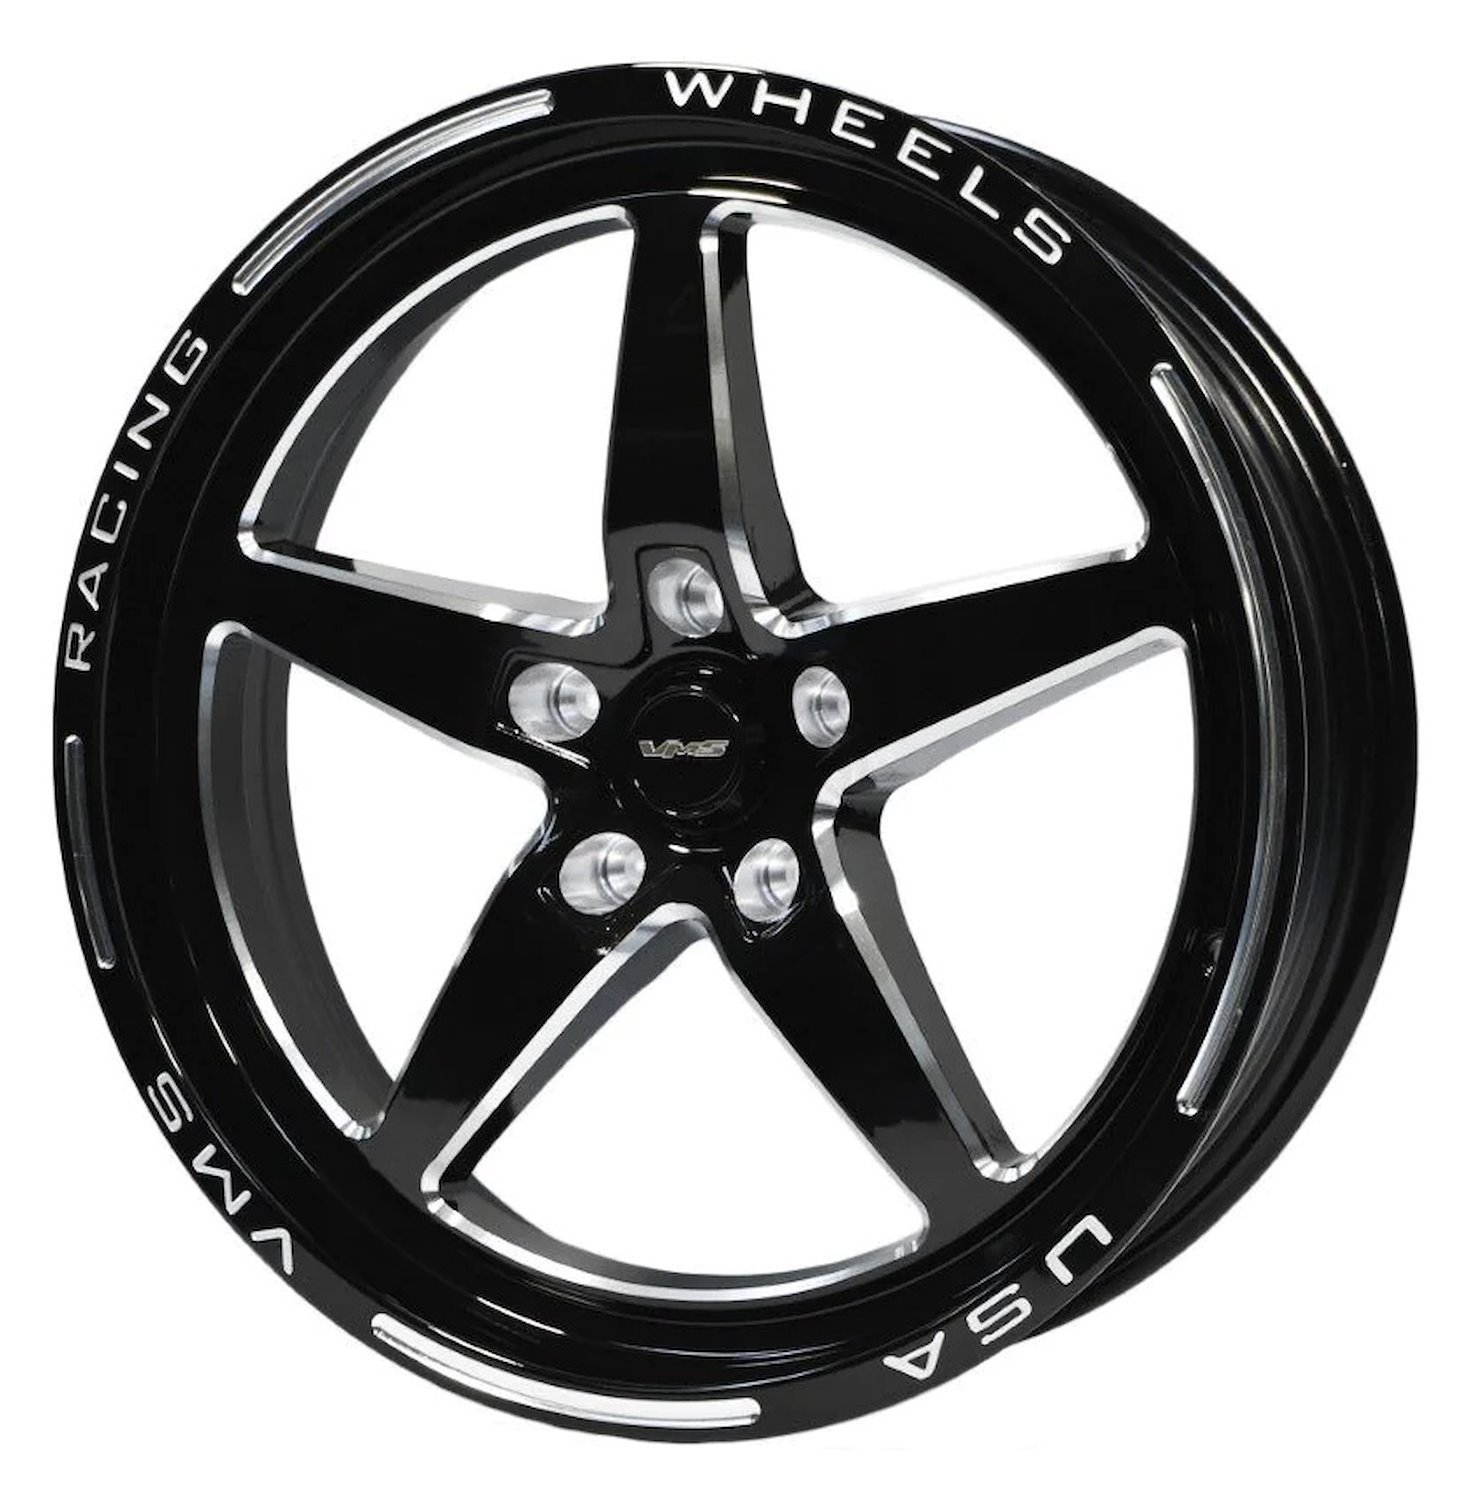 VWST016 V-Star Wheel, Size: 18